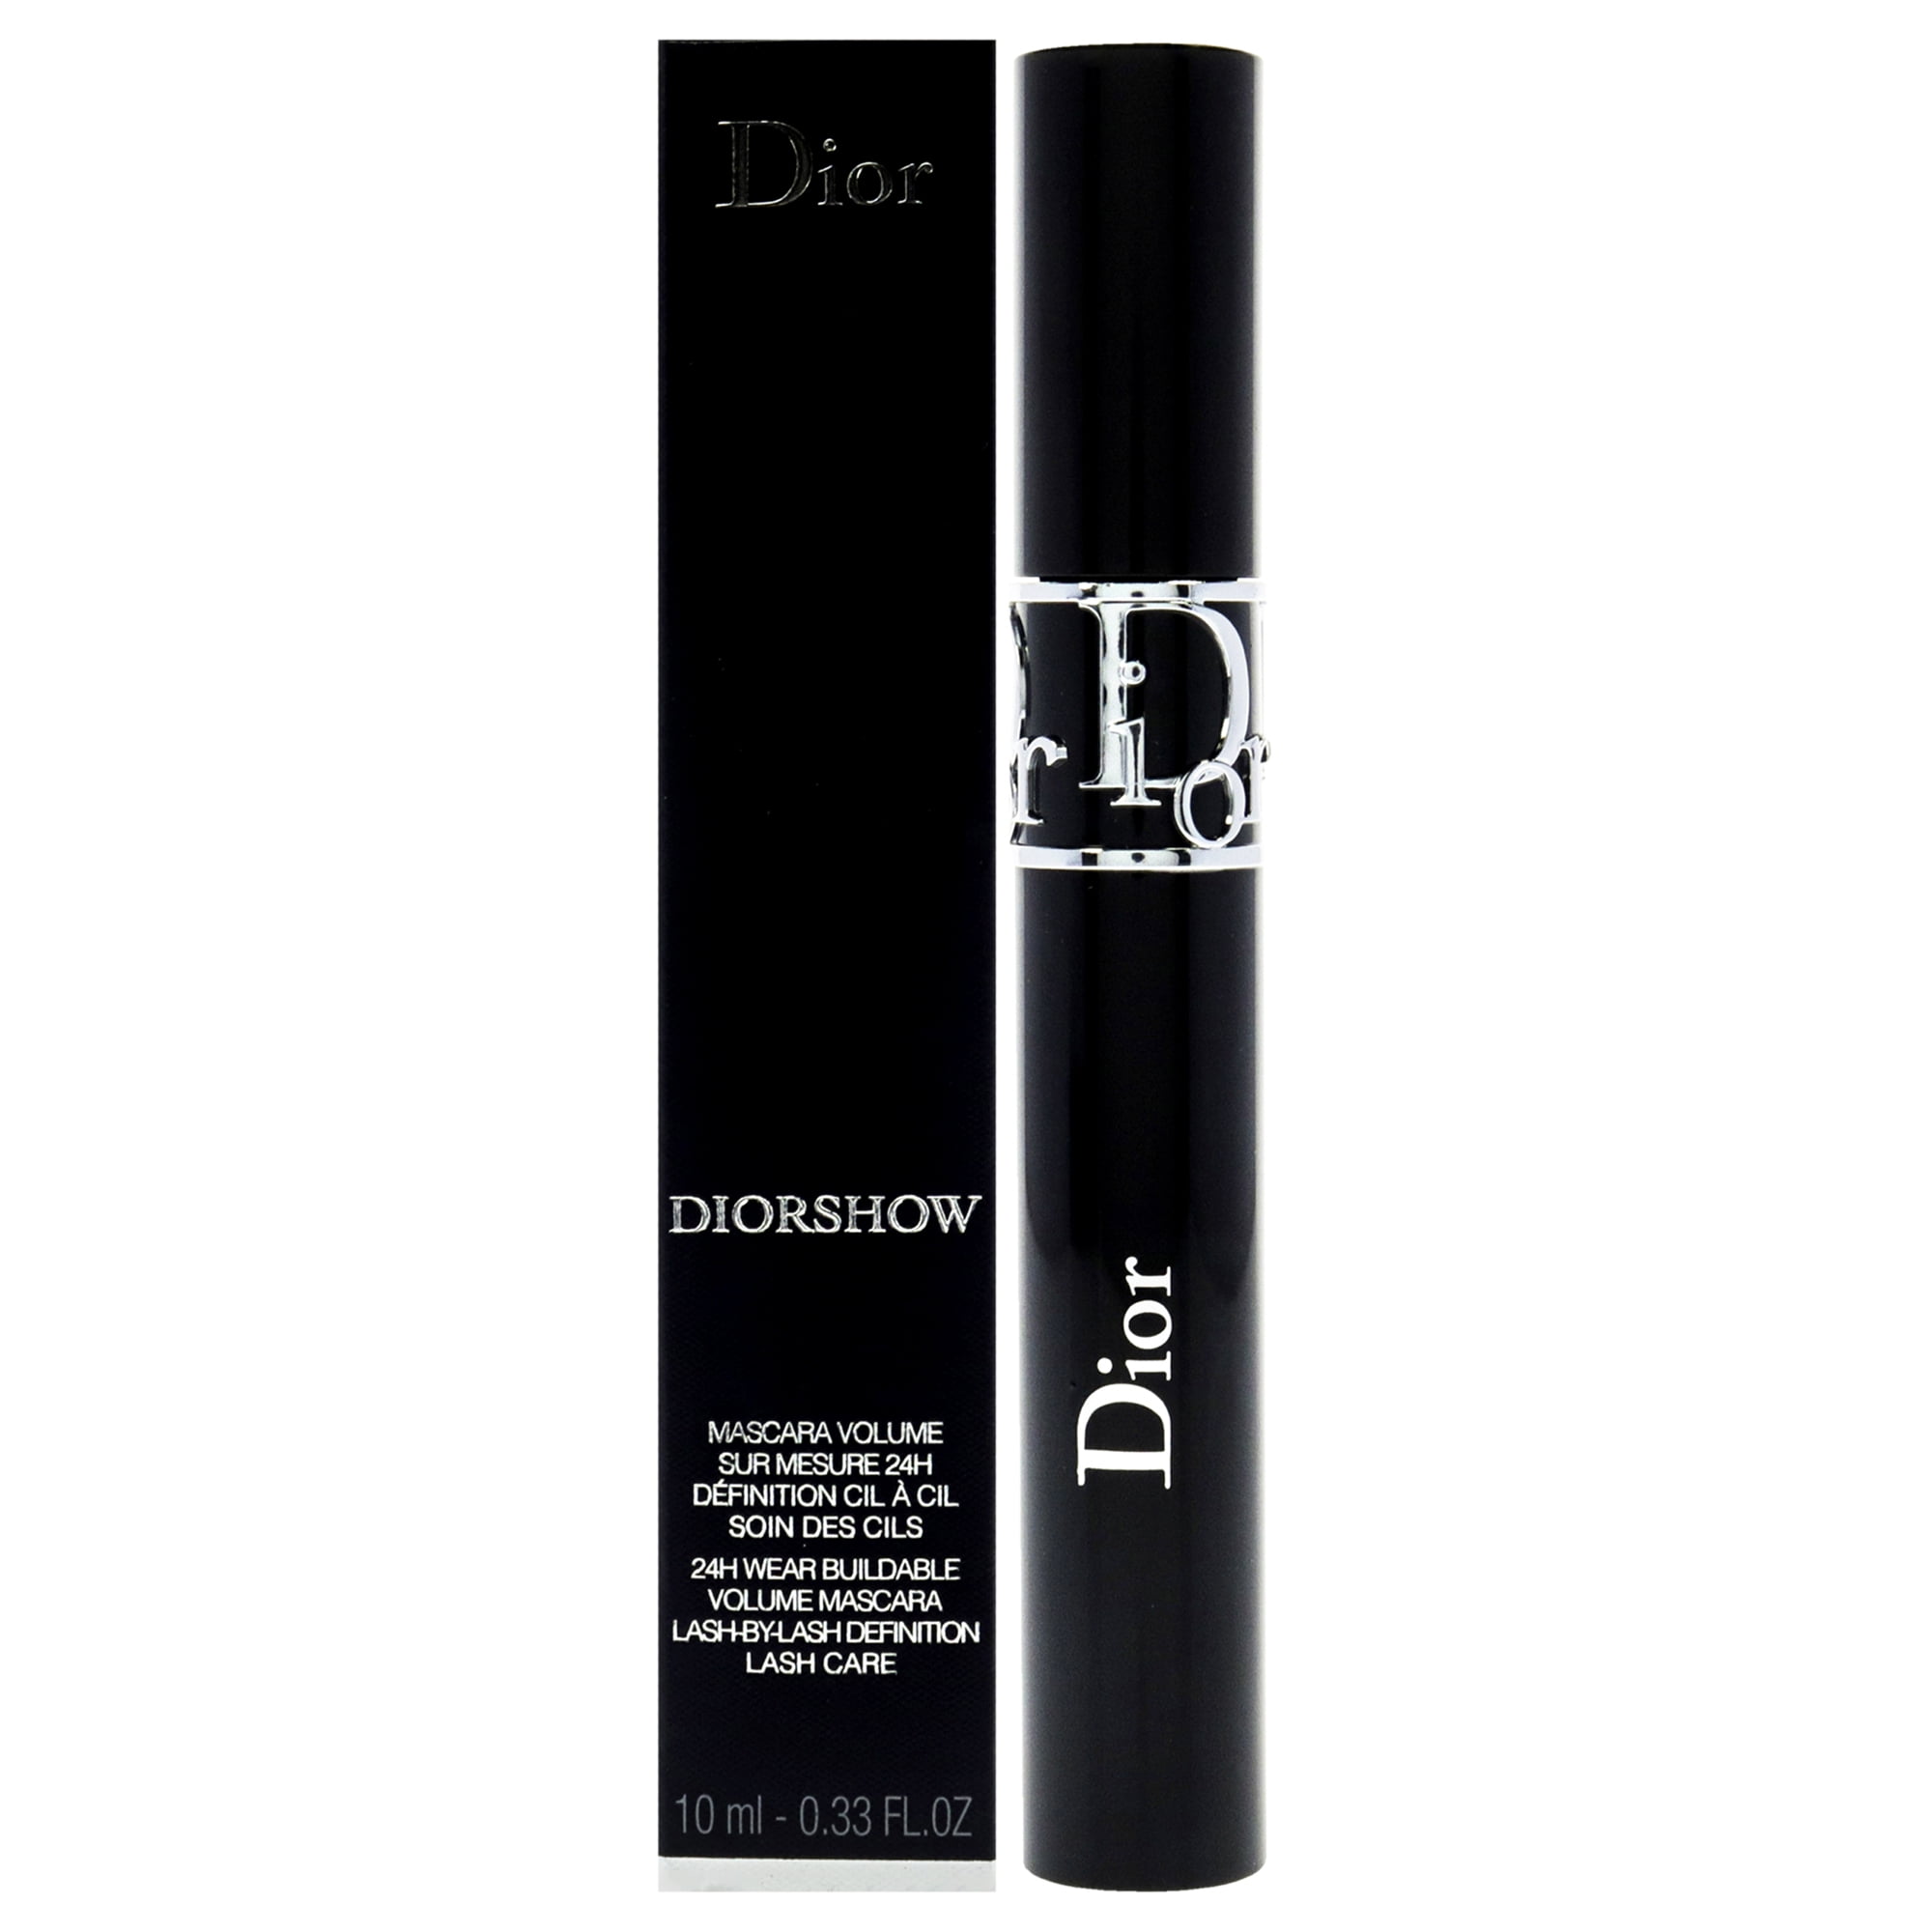 Christian Dior Diorshow 24h Wear Buildable Volume Mascara - 090 Black, 0.33  oz Mascara